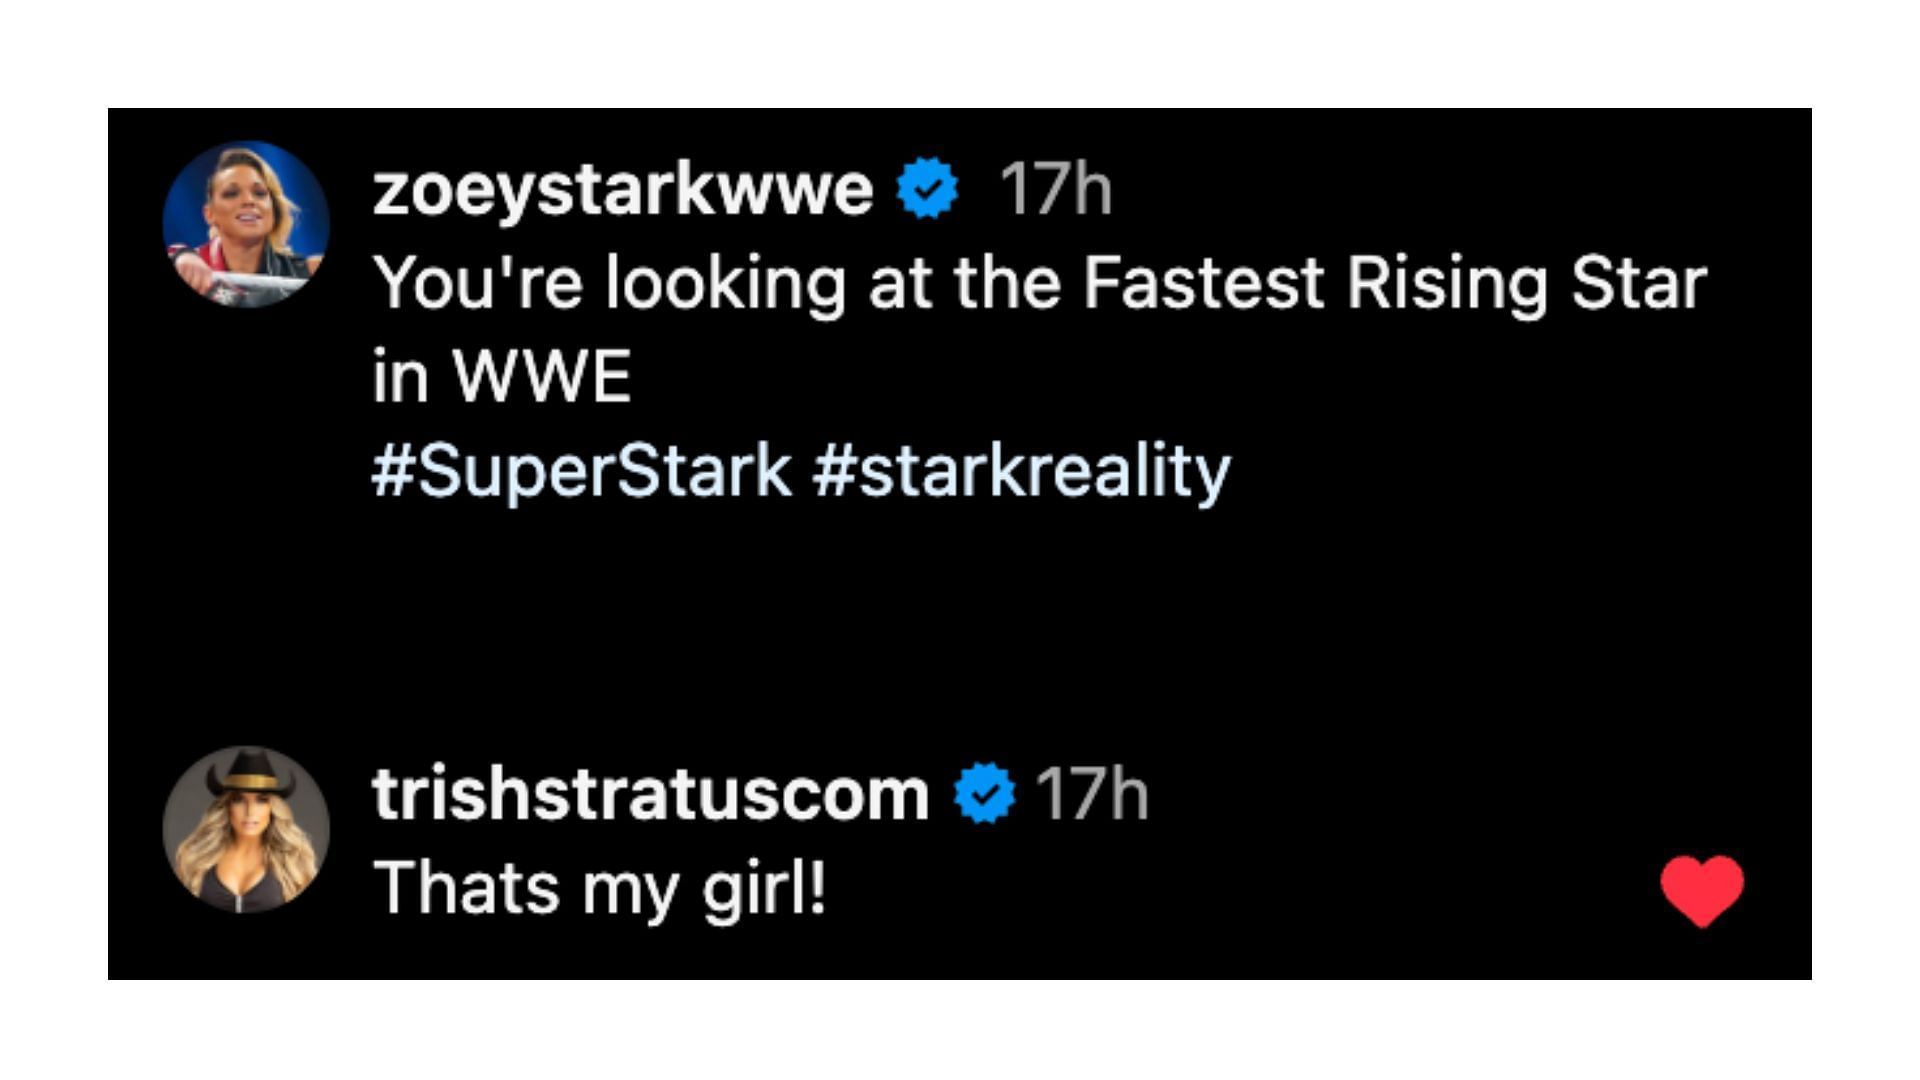 Stratus replied to Stark on Instagram.